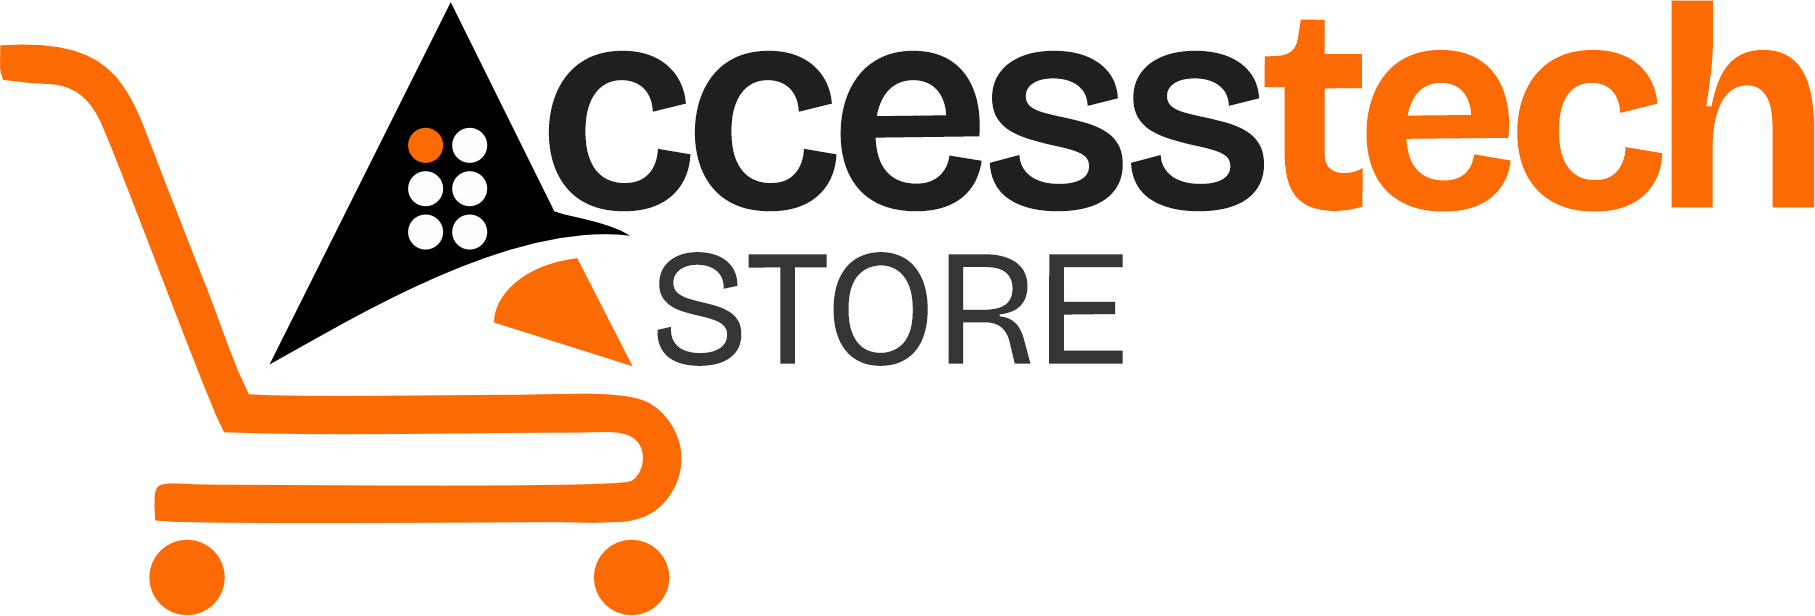 Accesstech store logo image